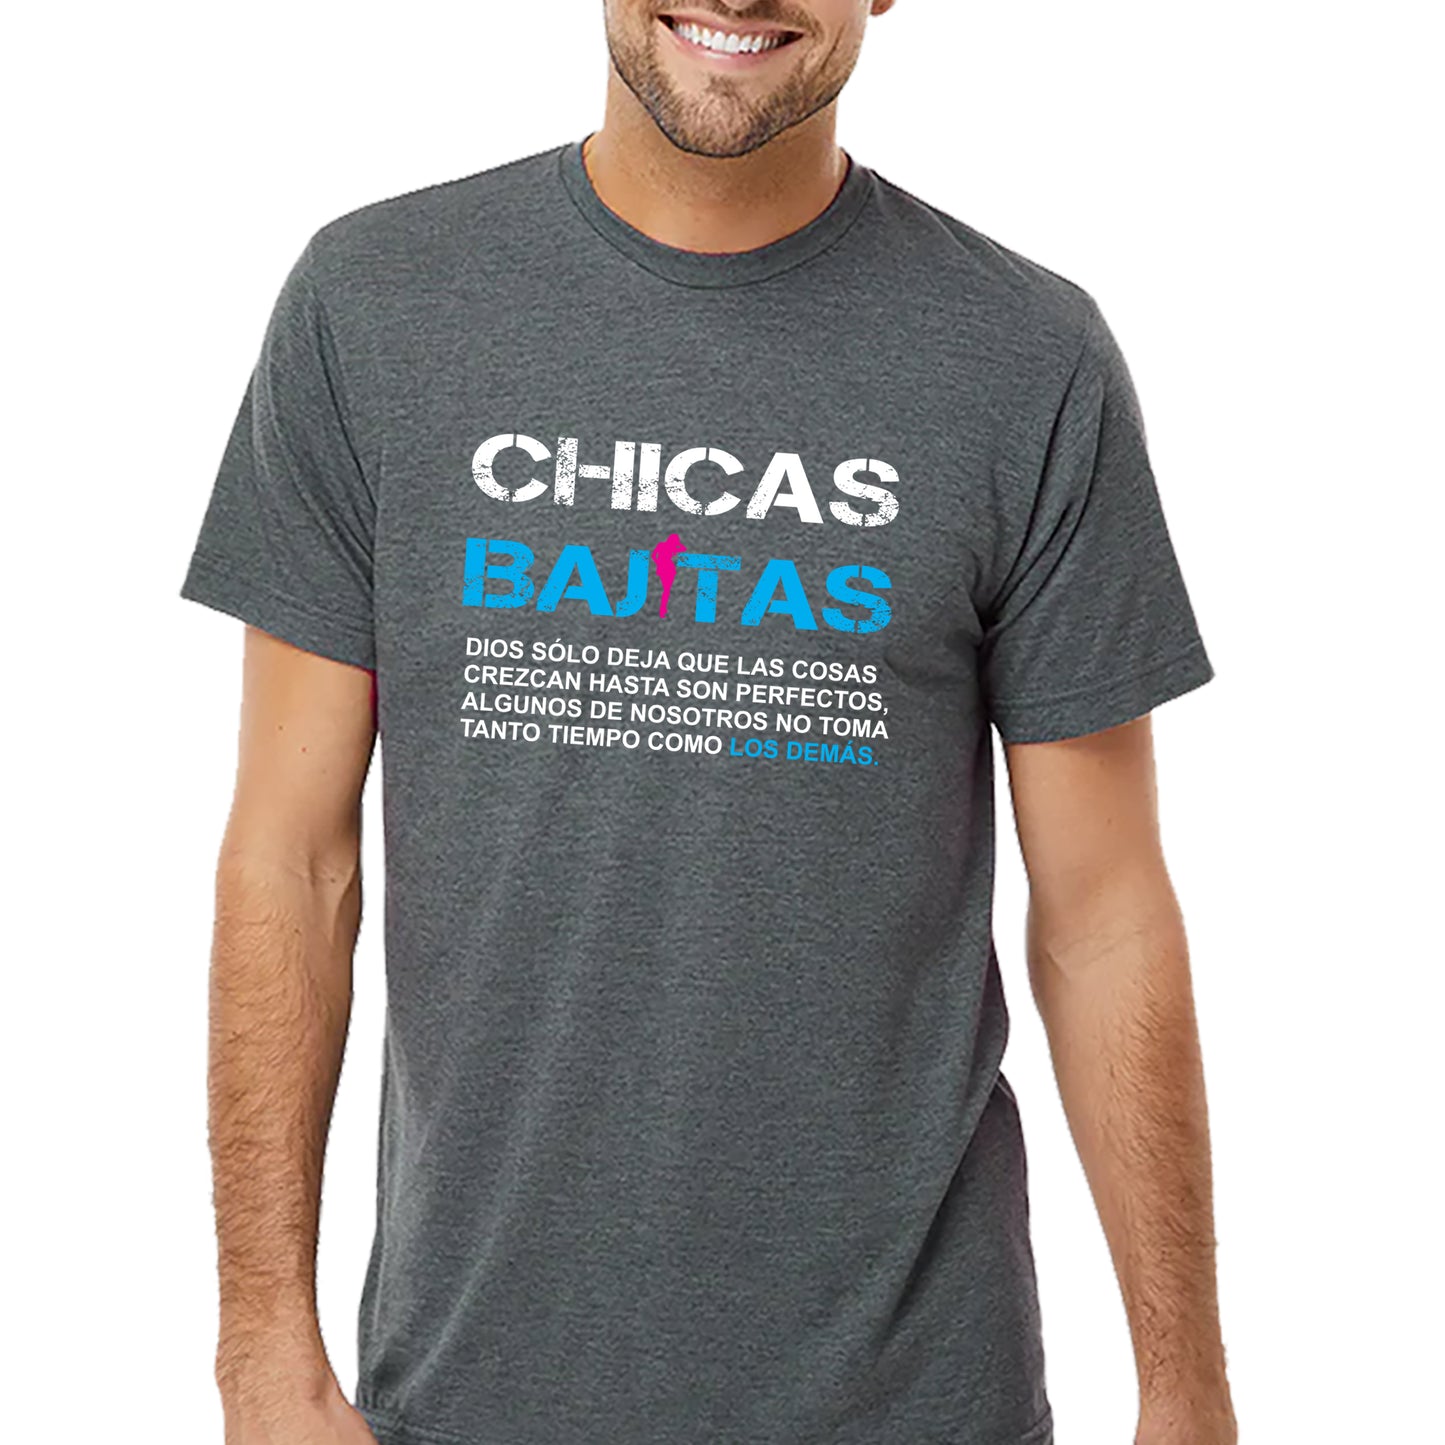 Chicas Bajitas T-shirt